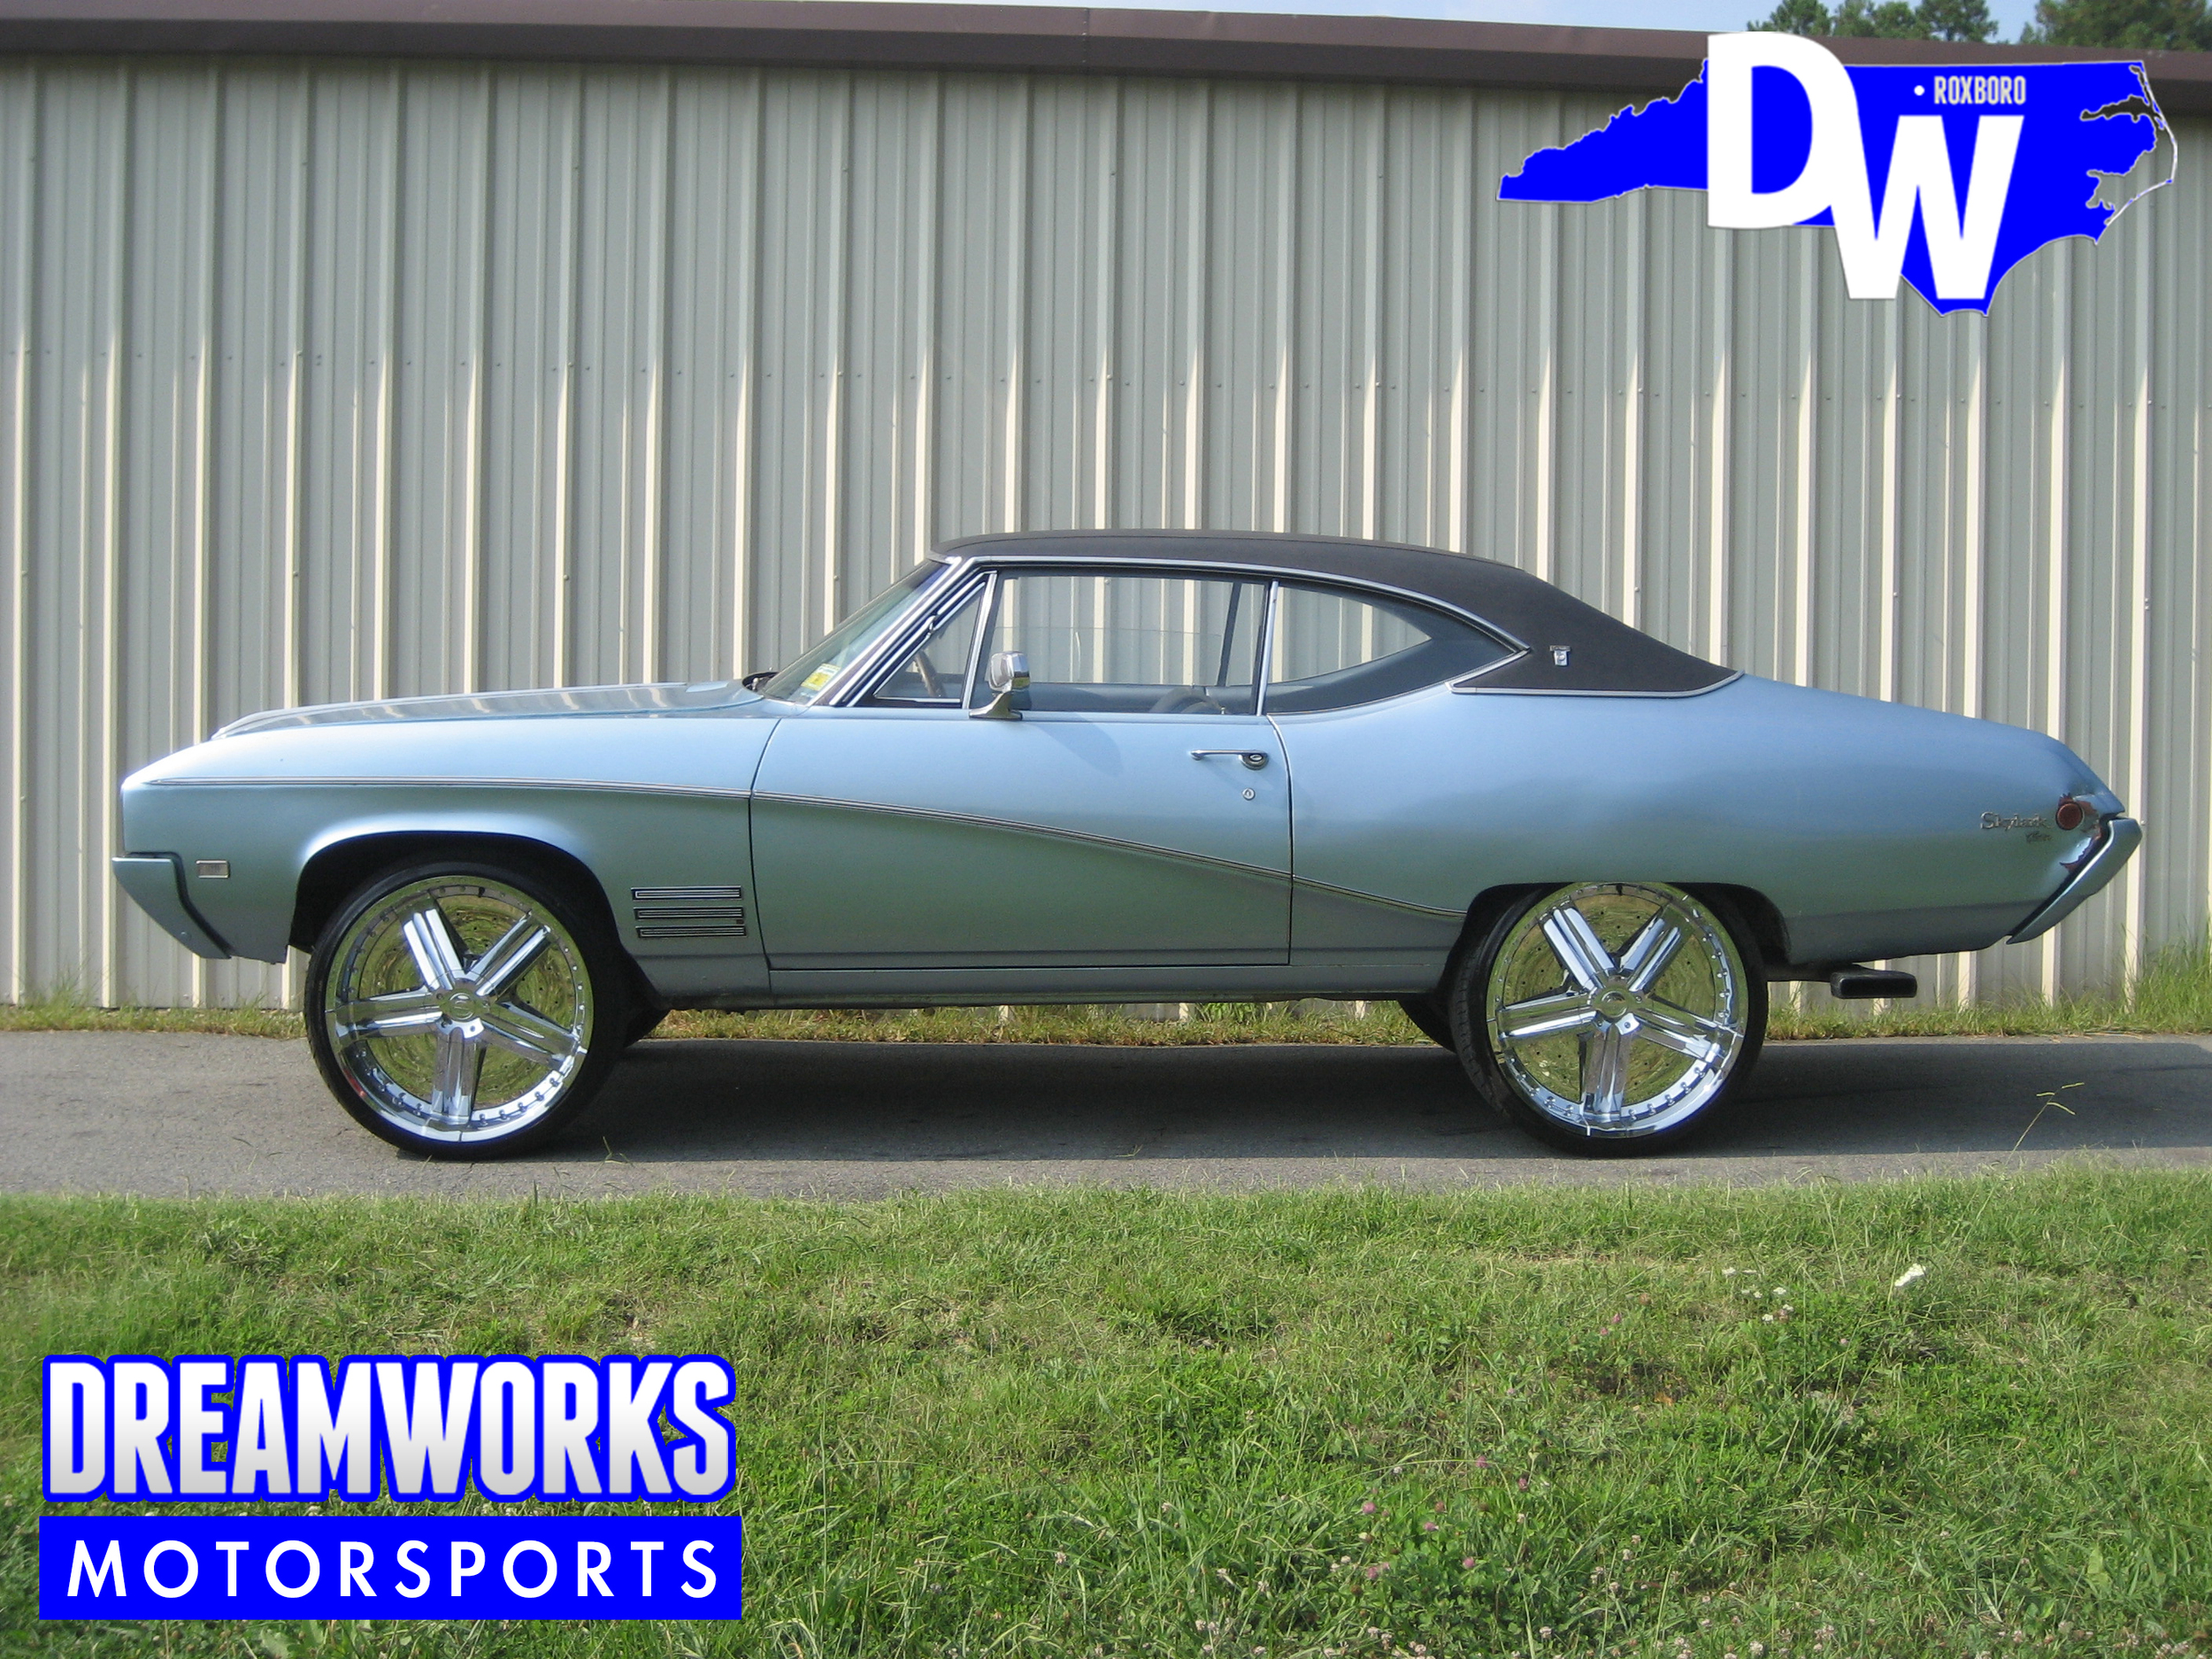 68-Buick-Skylark-Dreamworks-Motorsports-1.jpg